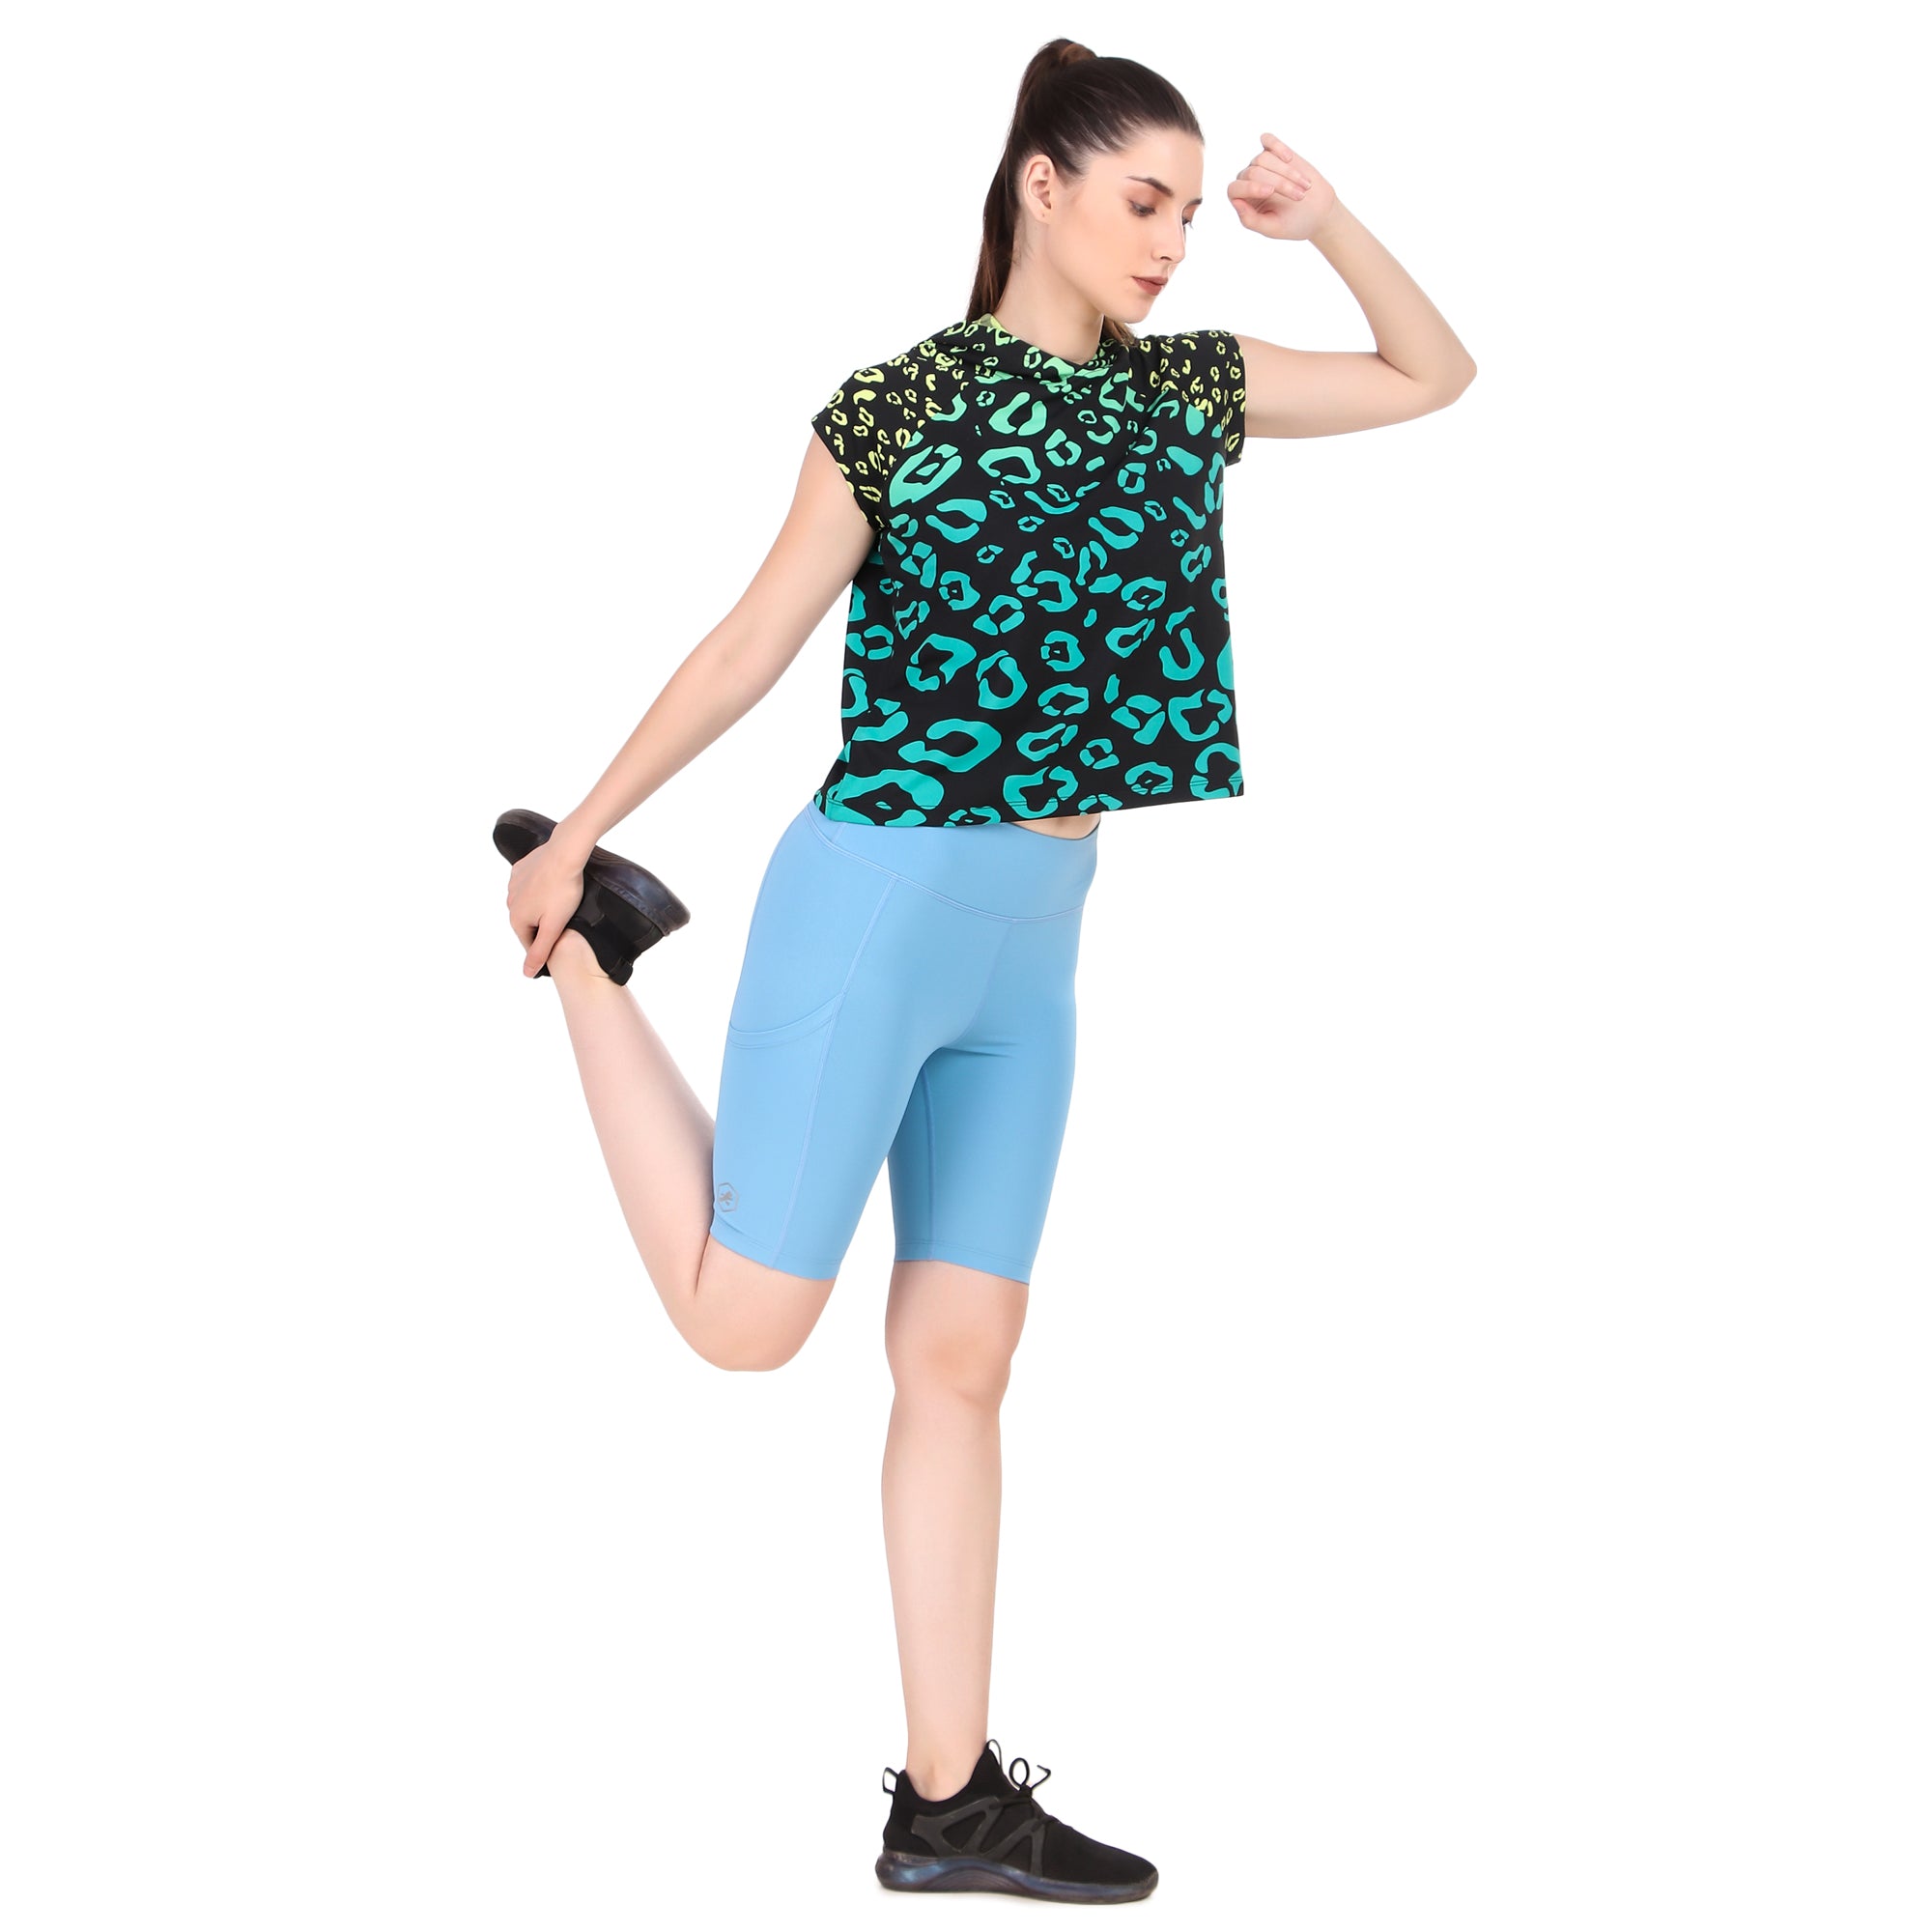 Nylon Compression Shorts For Women (Aqua)